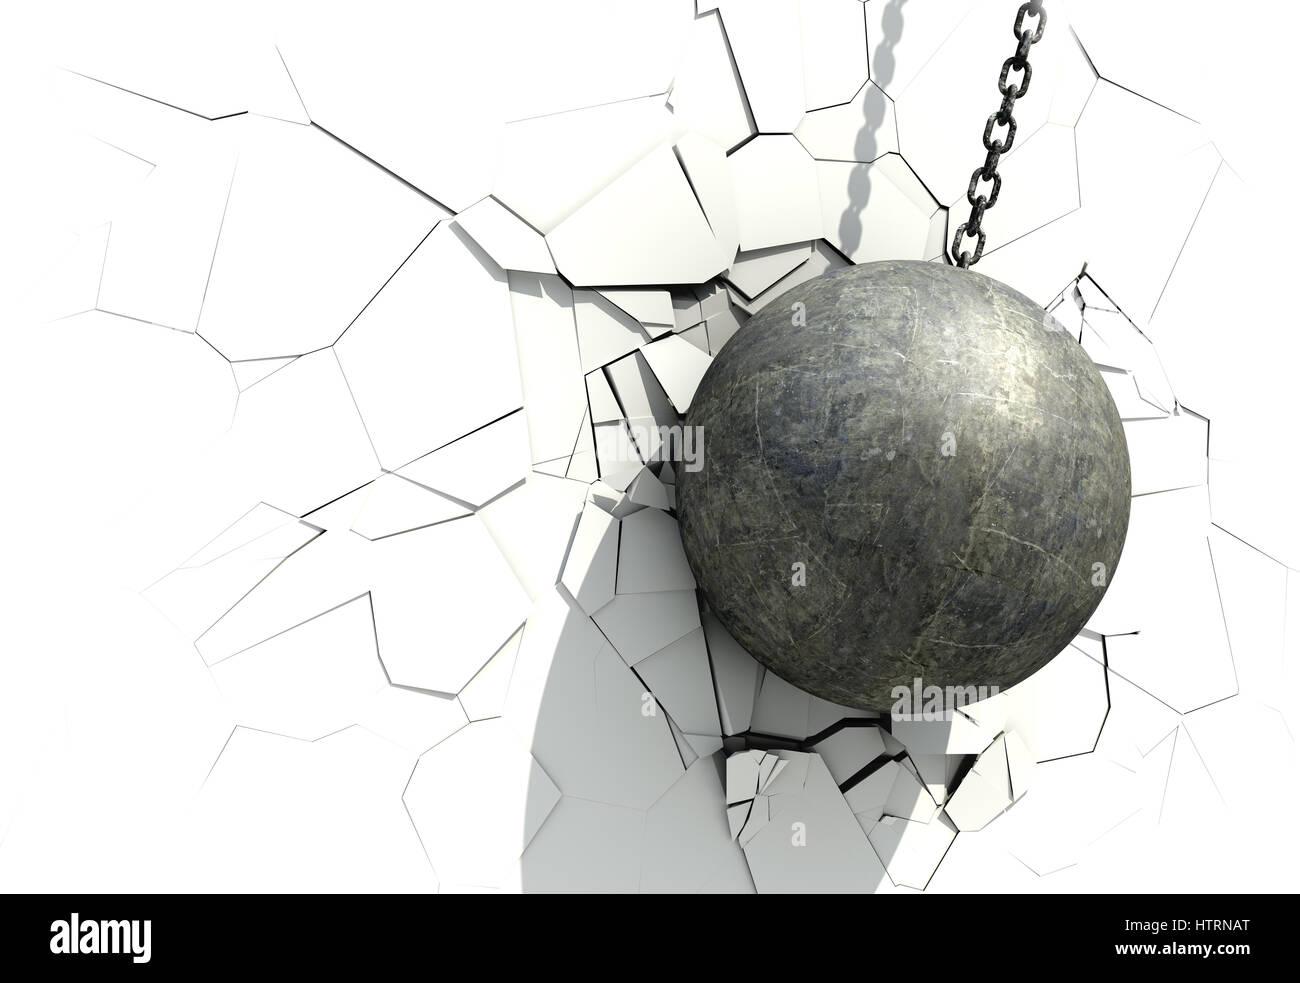 Metallic Wrecking Ball Shattering The White Wall. 3D Illustration. Stock Photo